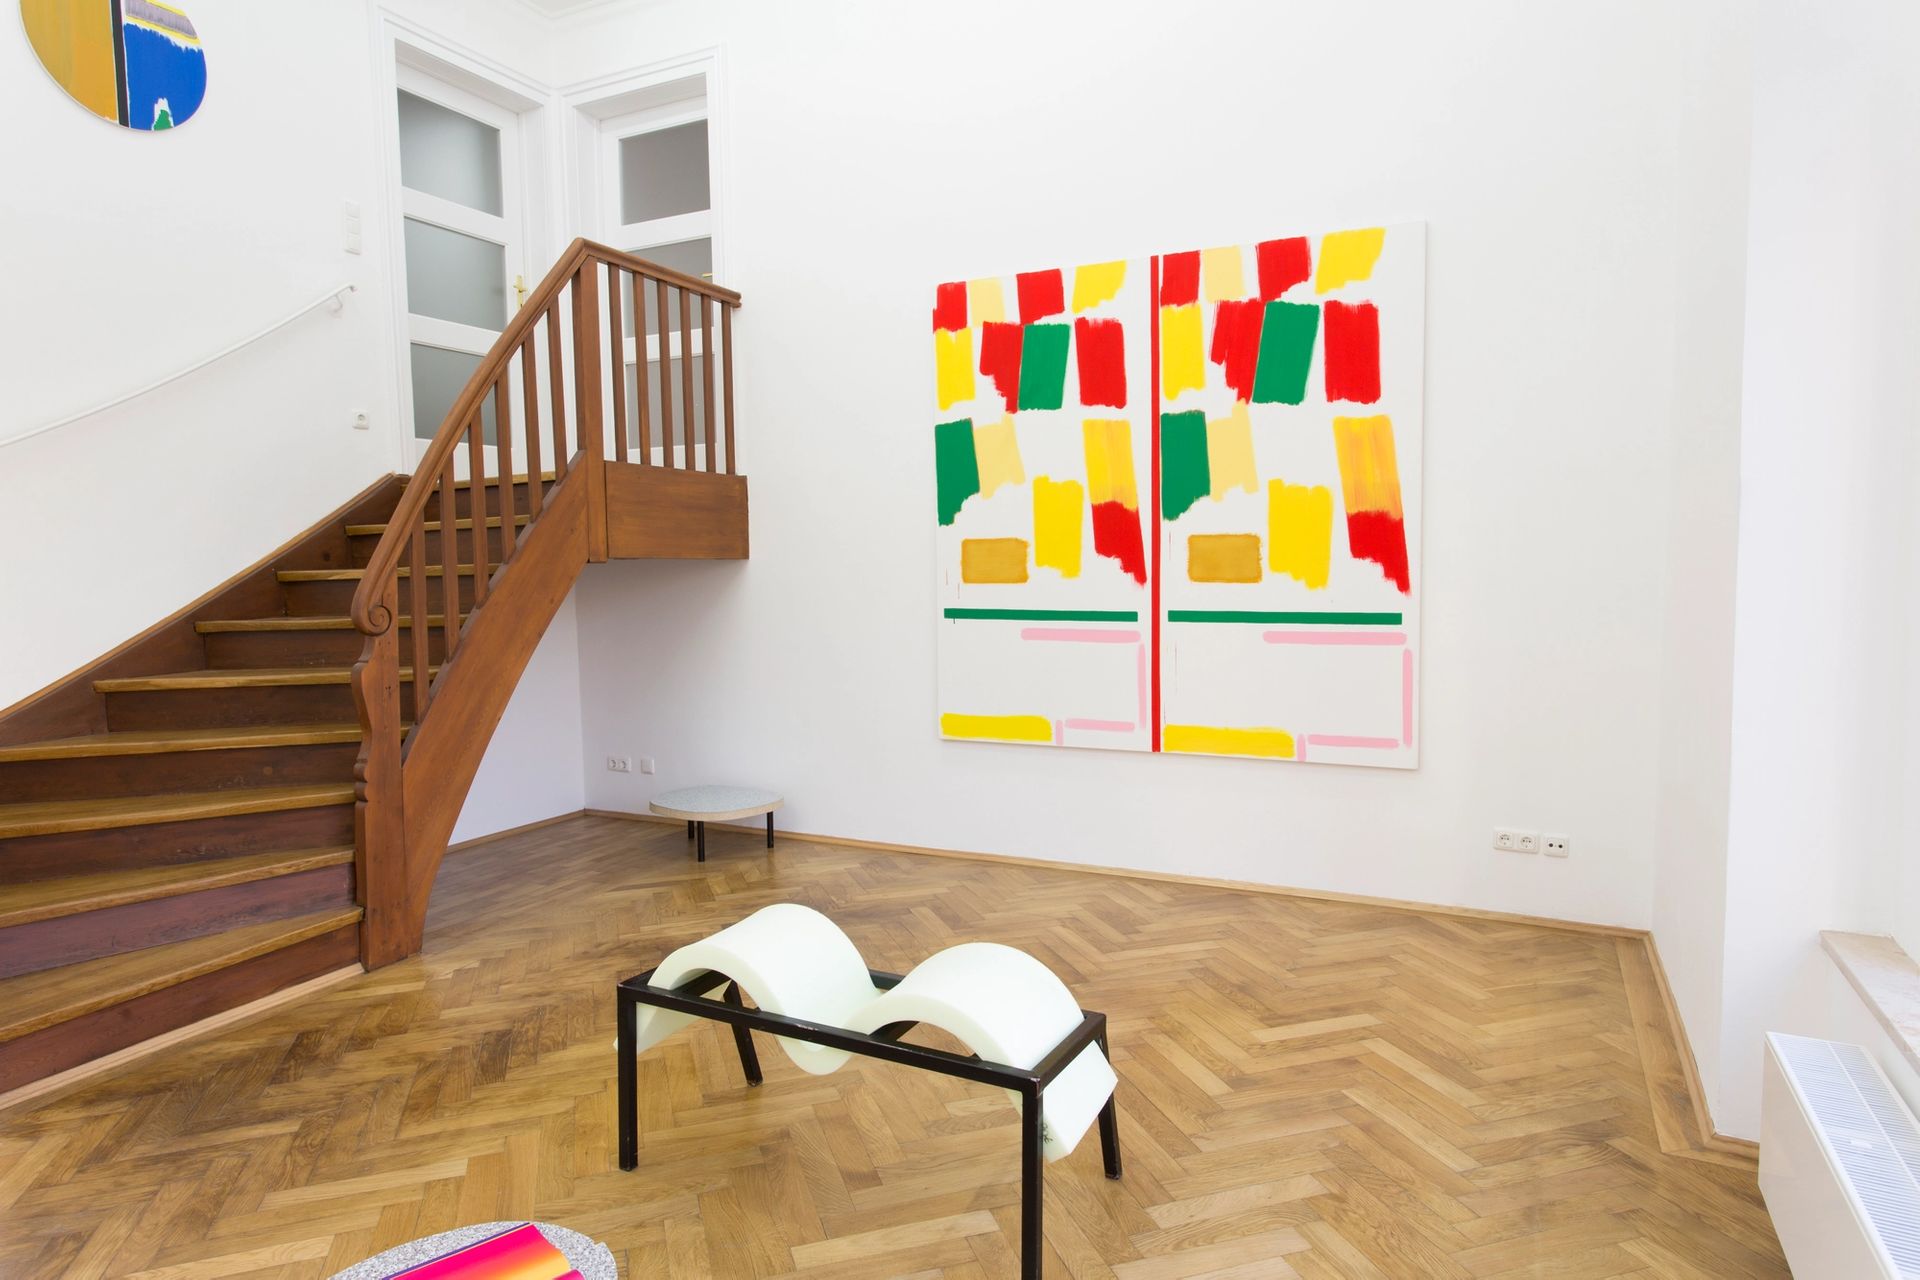 Installation view: Elvire Bonduelle, “waiting room #4”, 2015 (Bernard Piffaretti, Elvire Bonduelle)